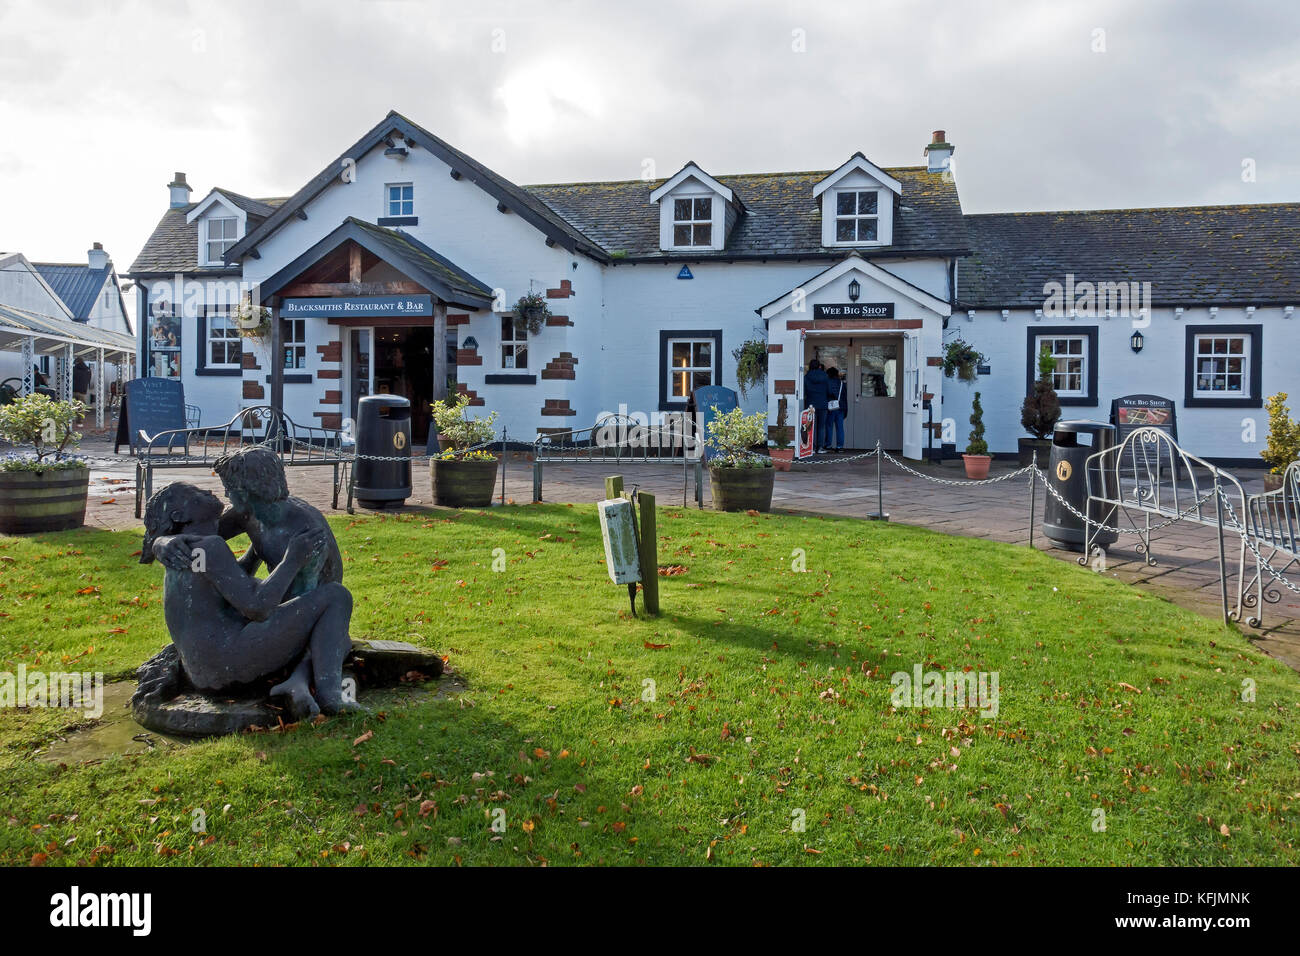 Entrance to the Blacksmiths Restaurant & Bar and Wee Big shop atGretna Green Gretna Dumfries & Galloway Scotland UK Stock Photo